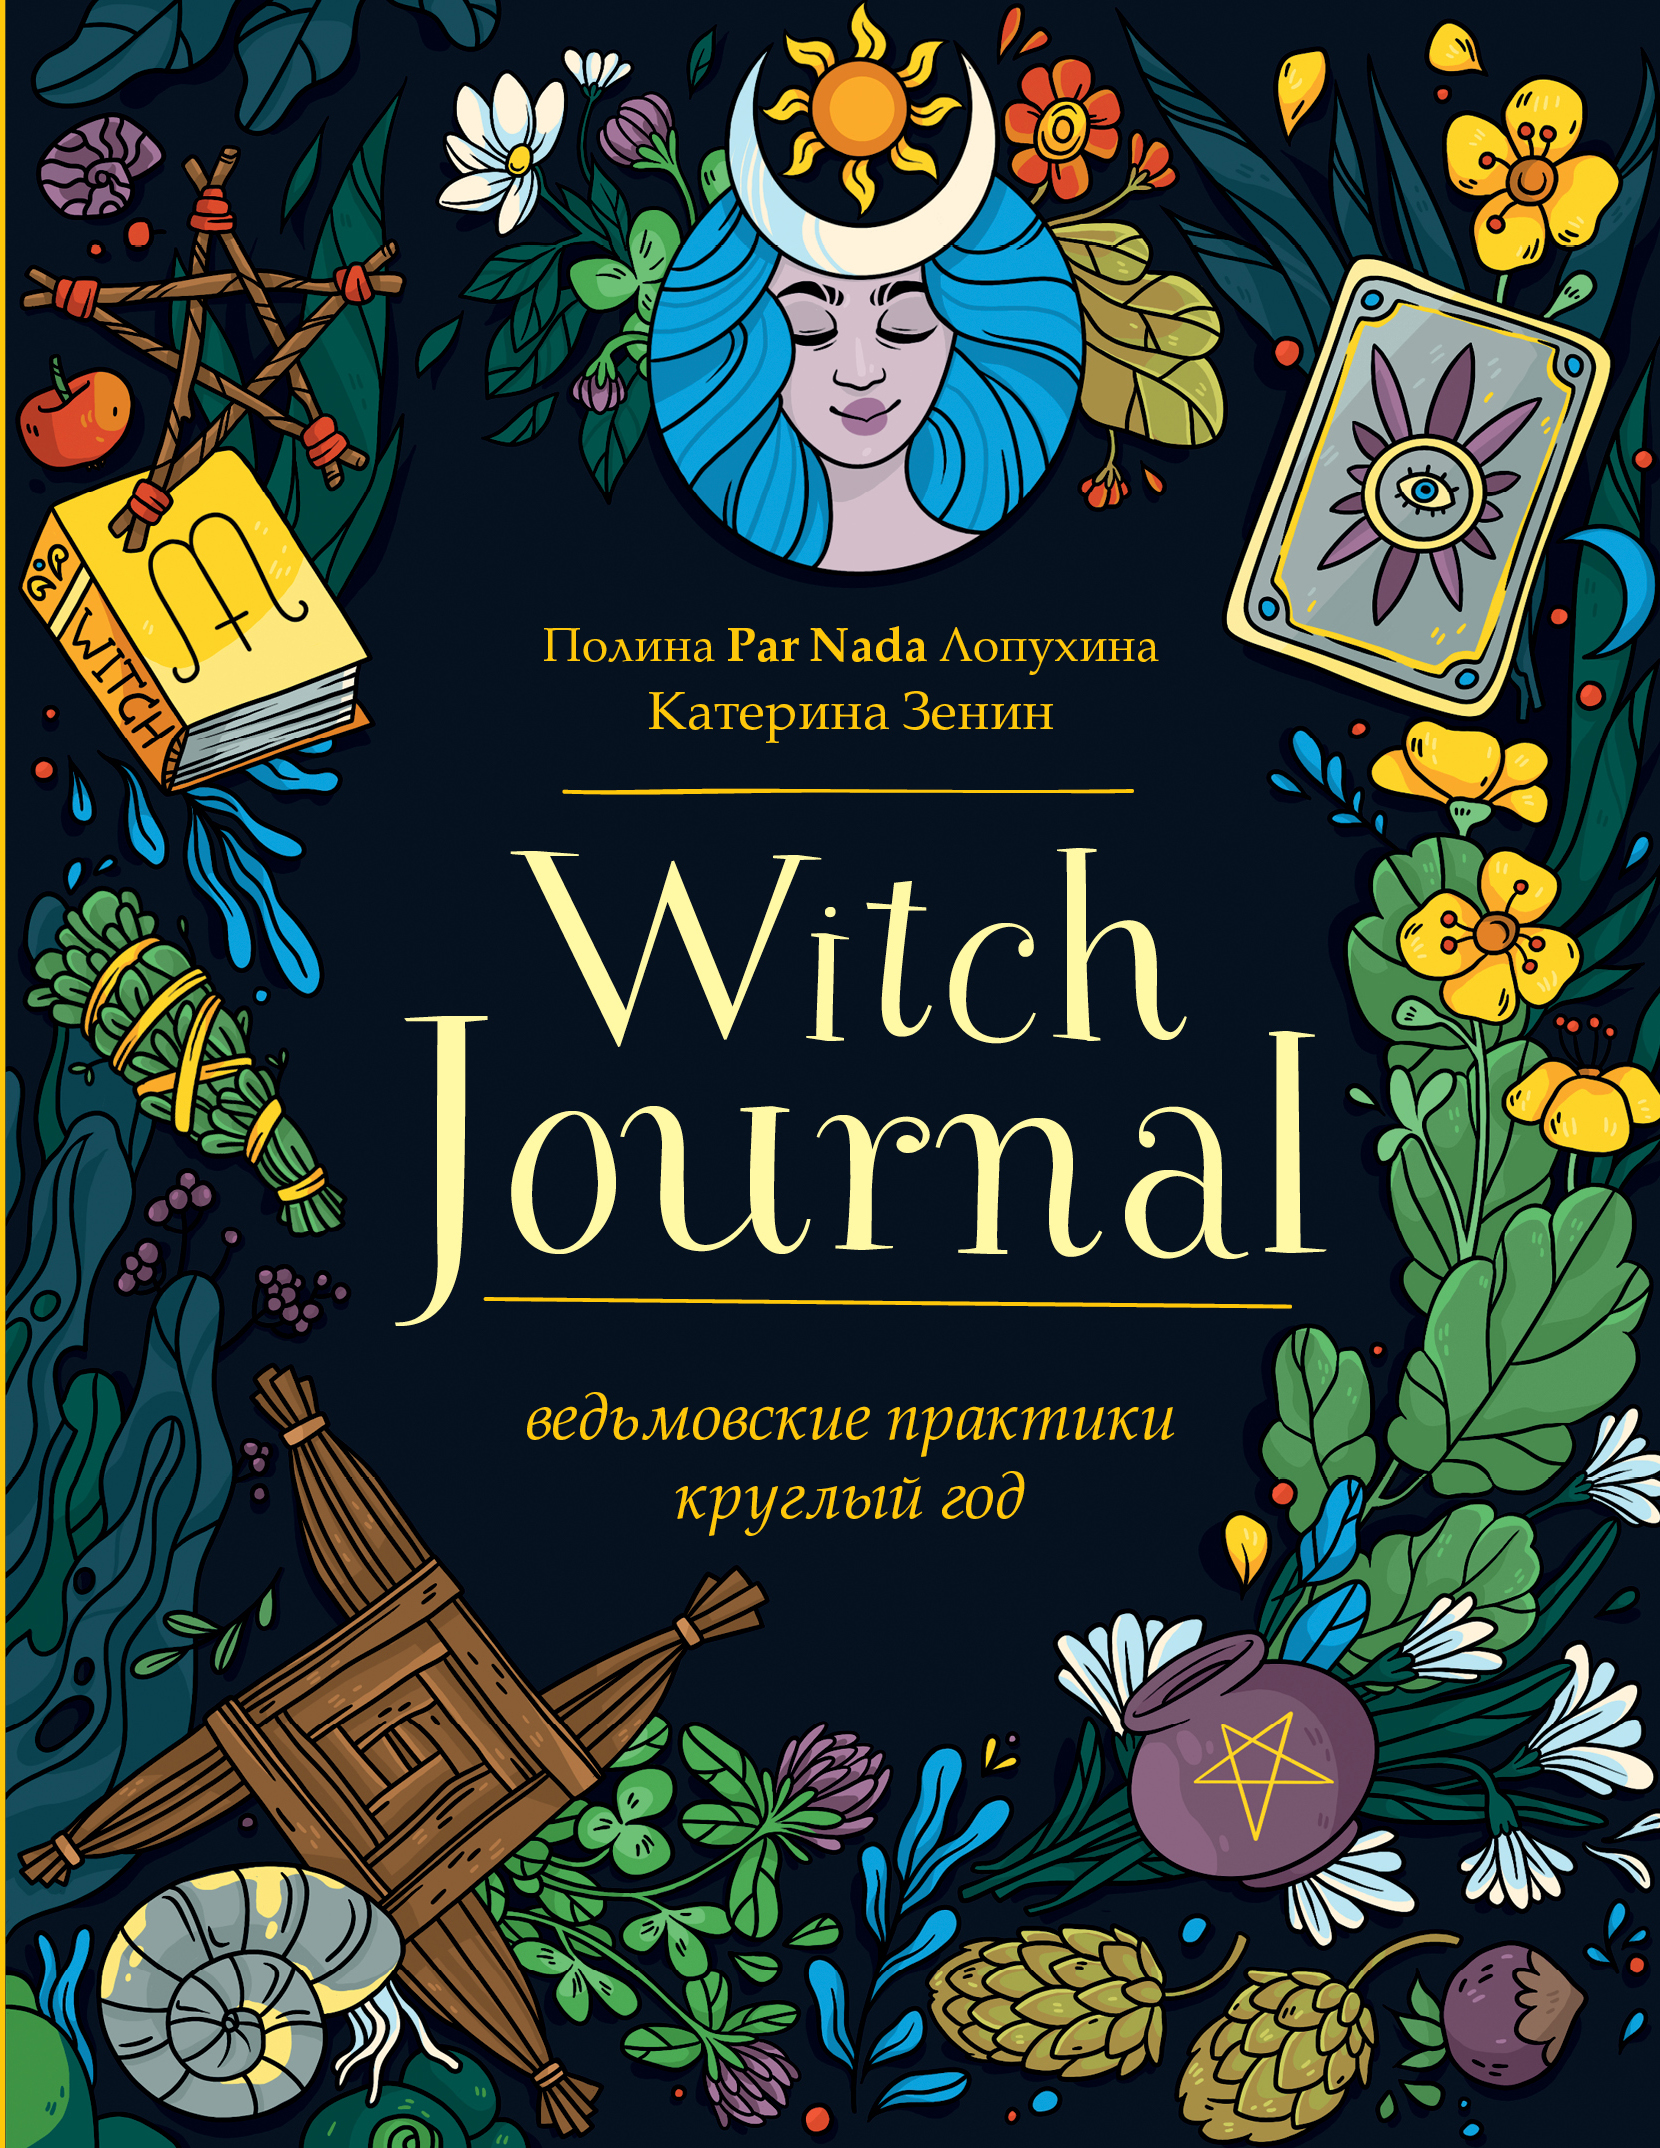  ..,  .. Witch Journal.     